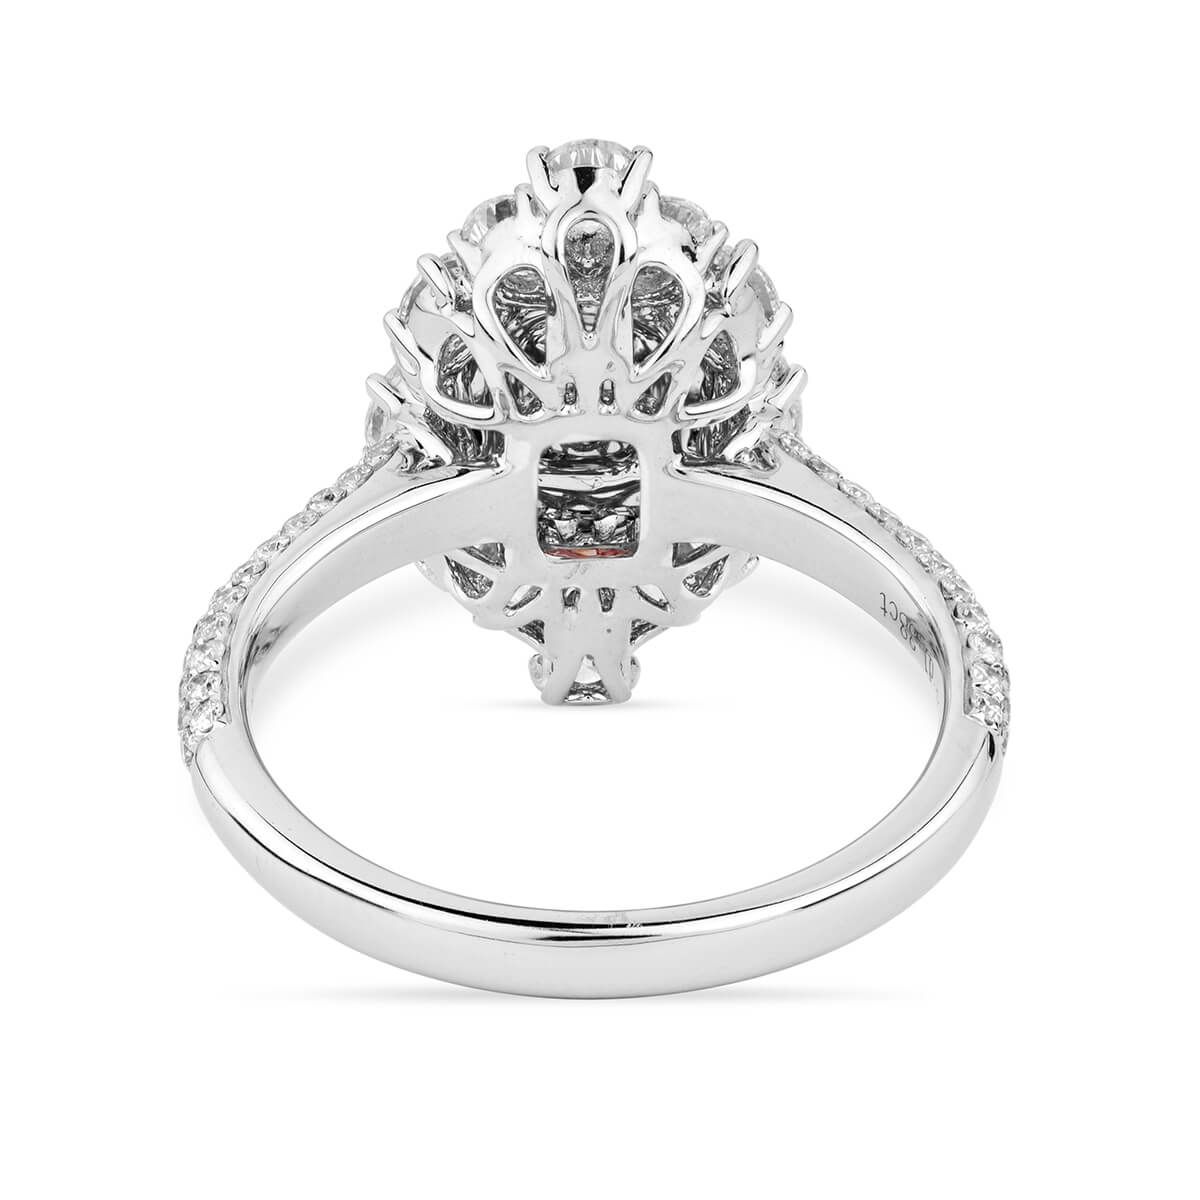 Very Light Pink Diamond Ring, 0.43 Ct. (1.81 Ct. TW), Cushion shape, GIA Certified, 2195307838